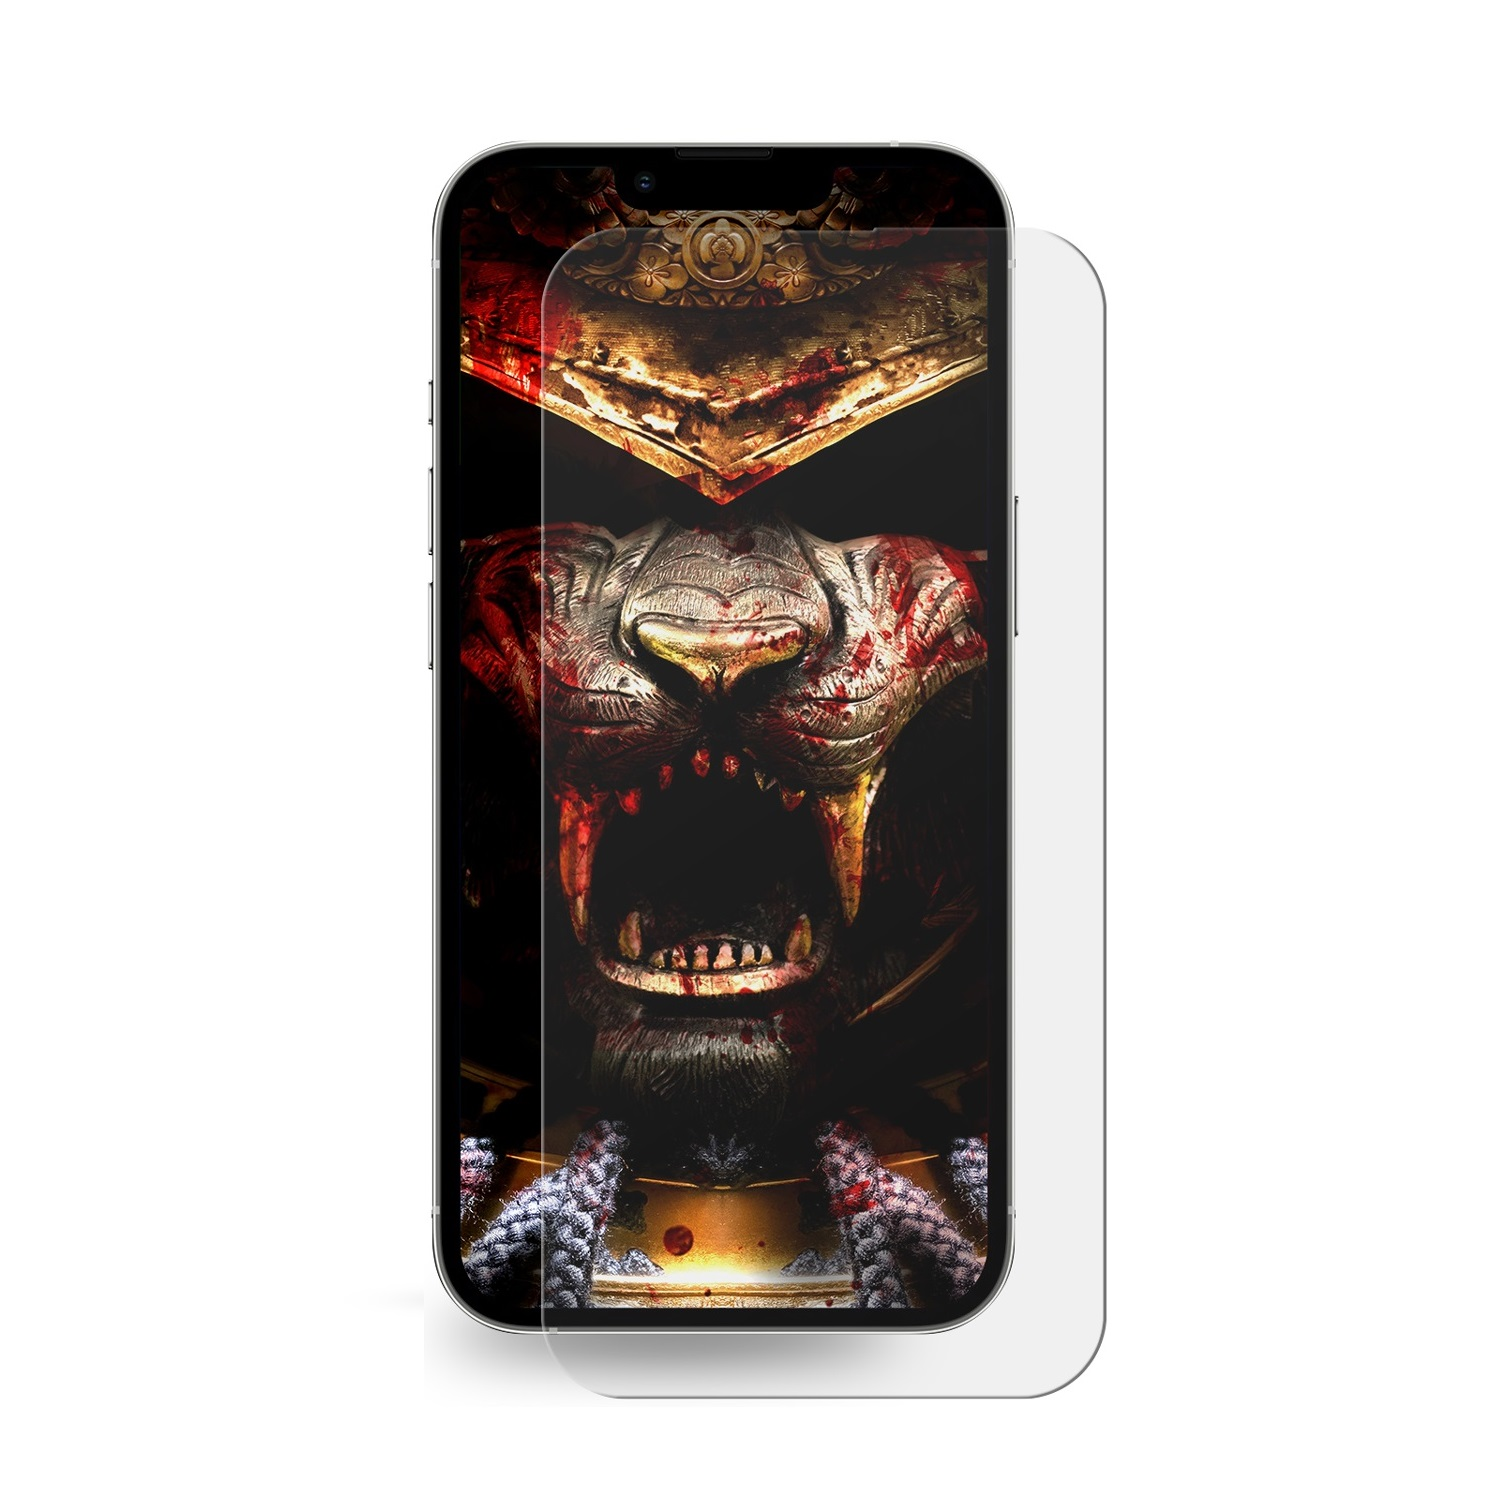 PROTECTORKING 2x FULL COVER Panzerfolie HYDROGEL Apple Pro 14 HD Displayschutzfolie(für KLAR Max) iPhone